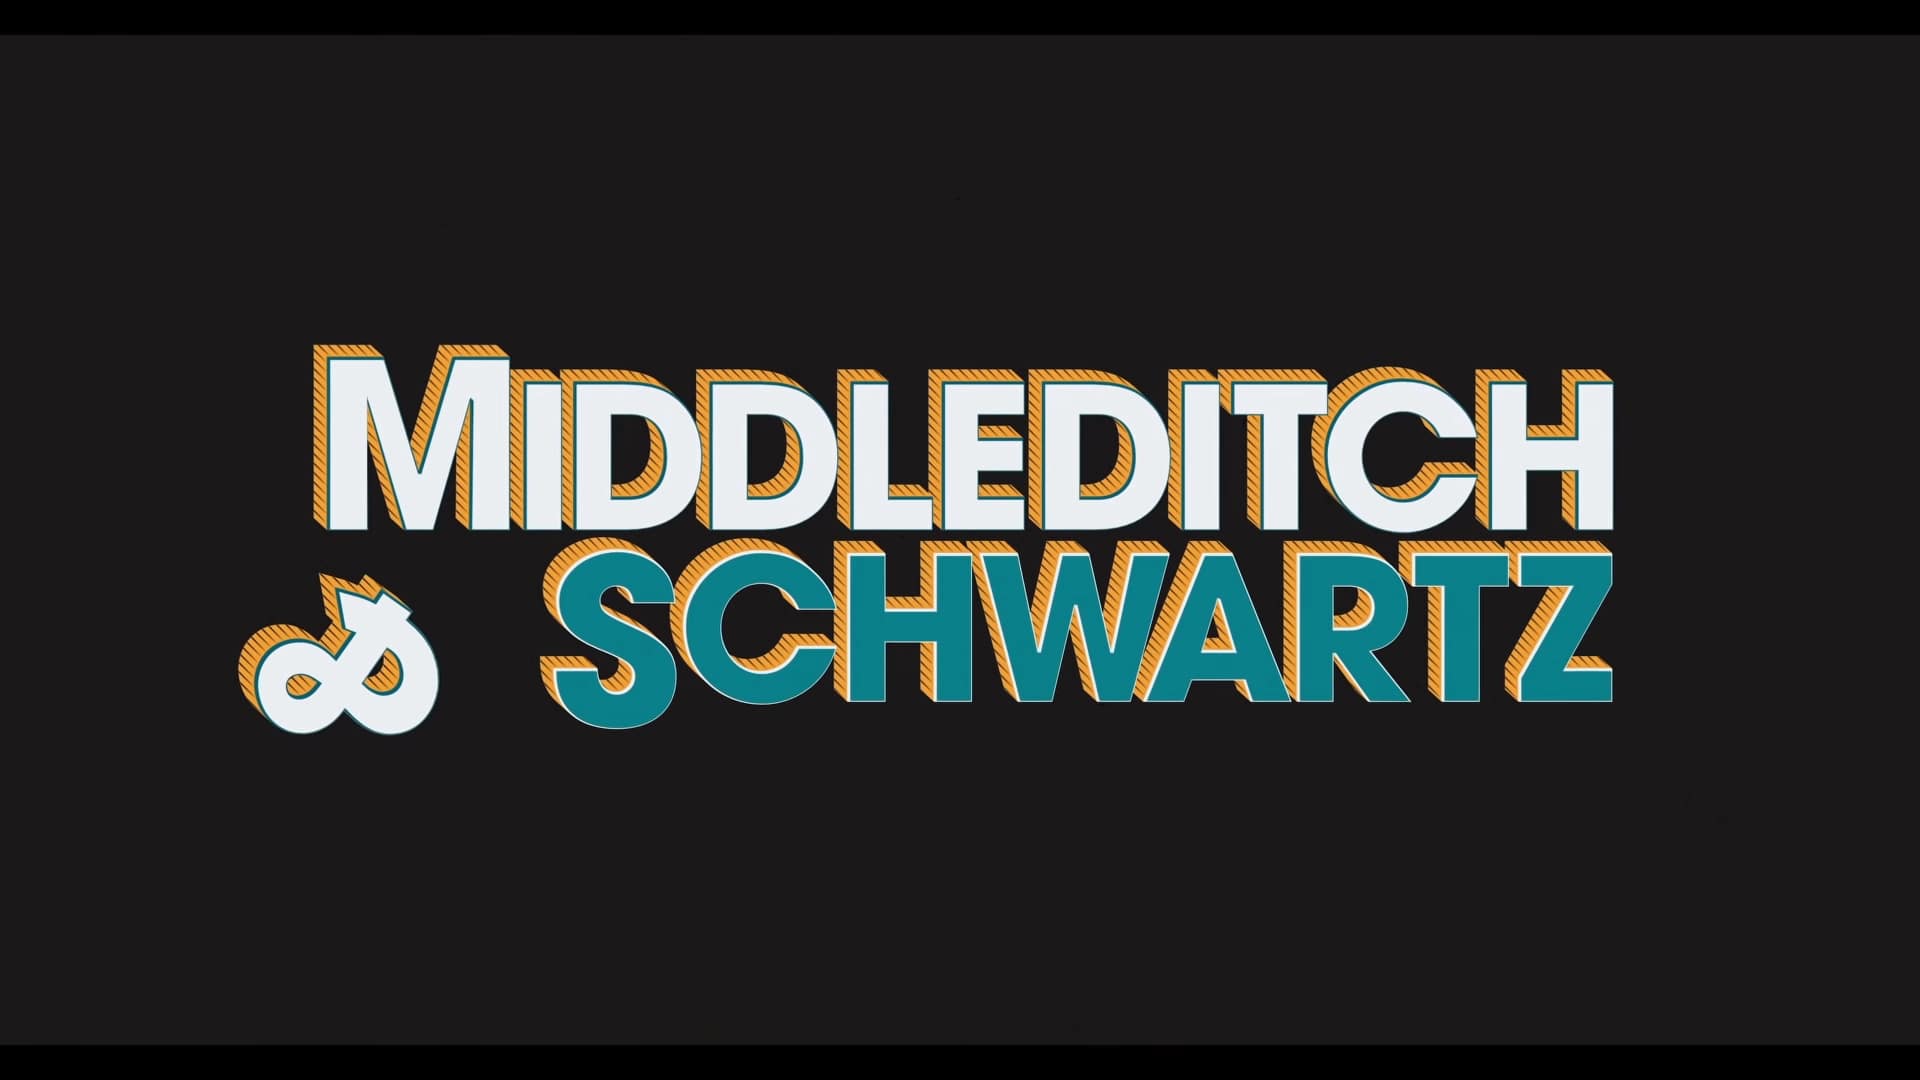 Middleditch & Schwartz Netflix Trailer, Netflix Comedy Trailers, Netflix Comedy Specials, Coming to Netflix in April 2020